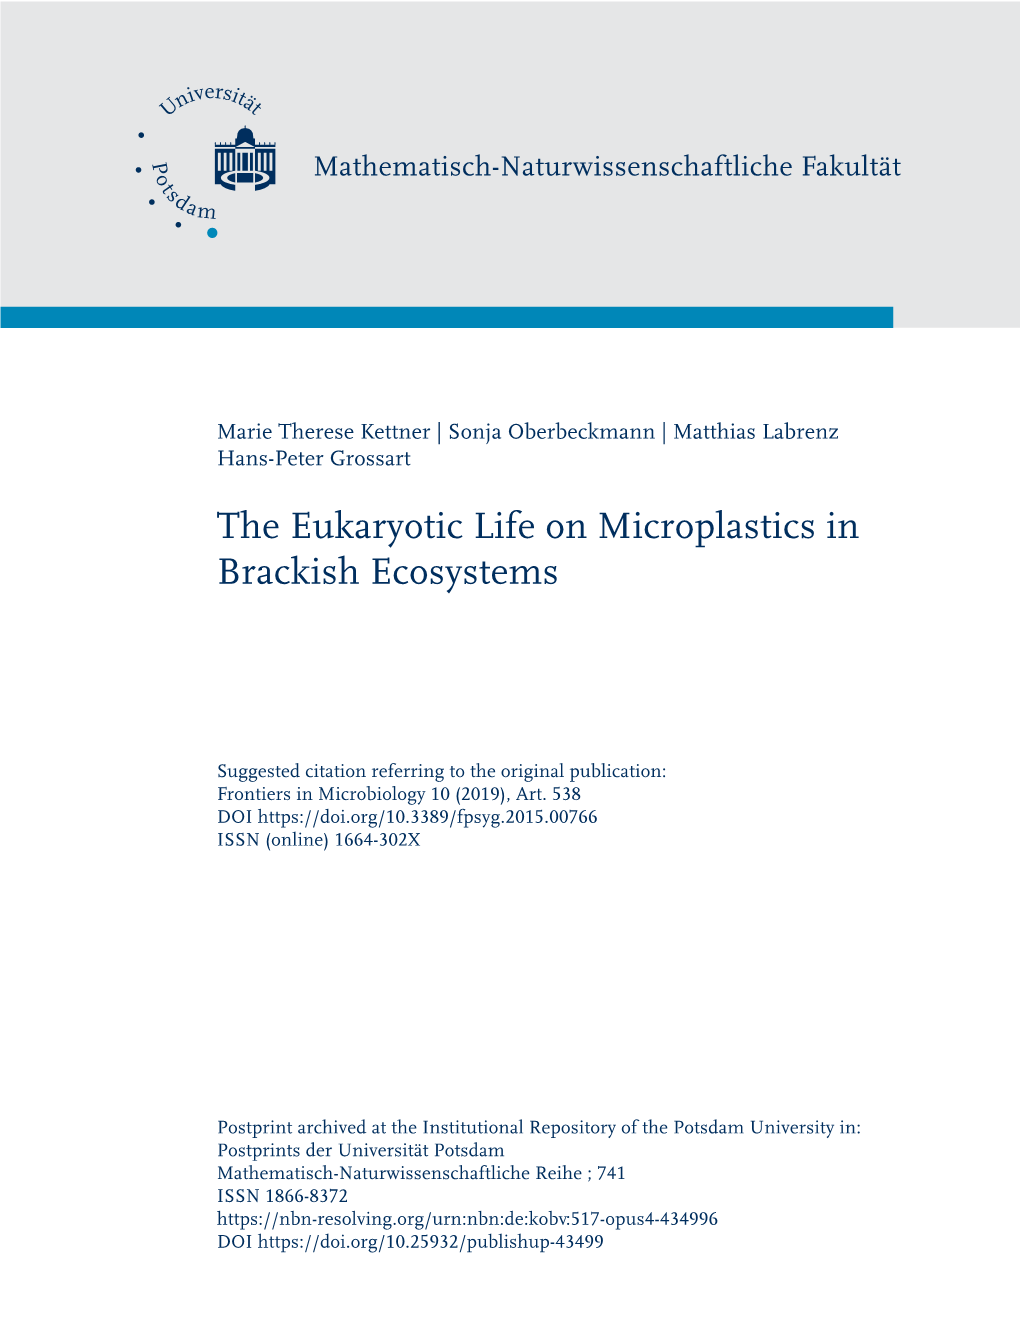 The Eukaryotic Life on Microplastics in Brackish Ecosystems